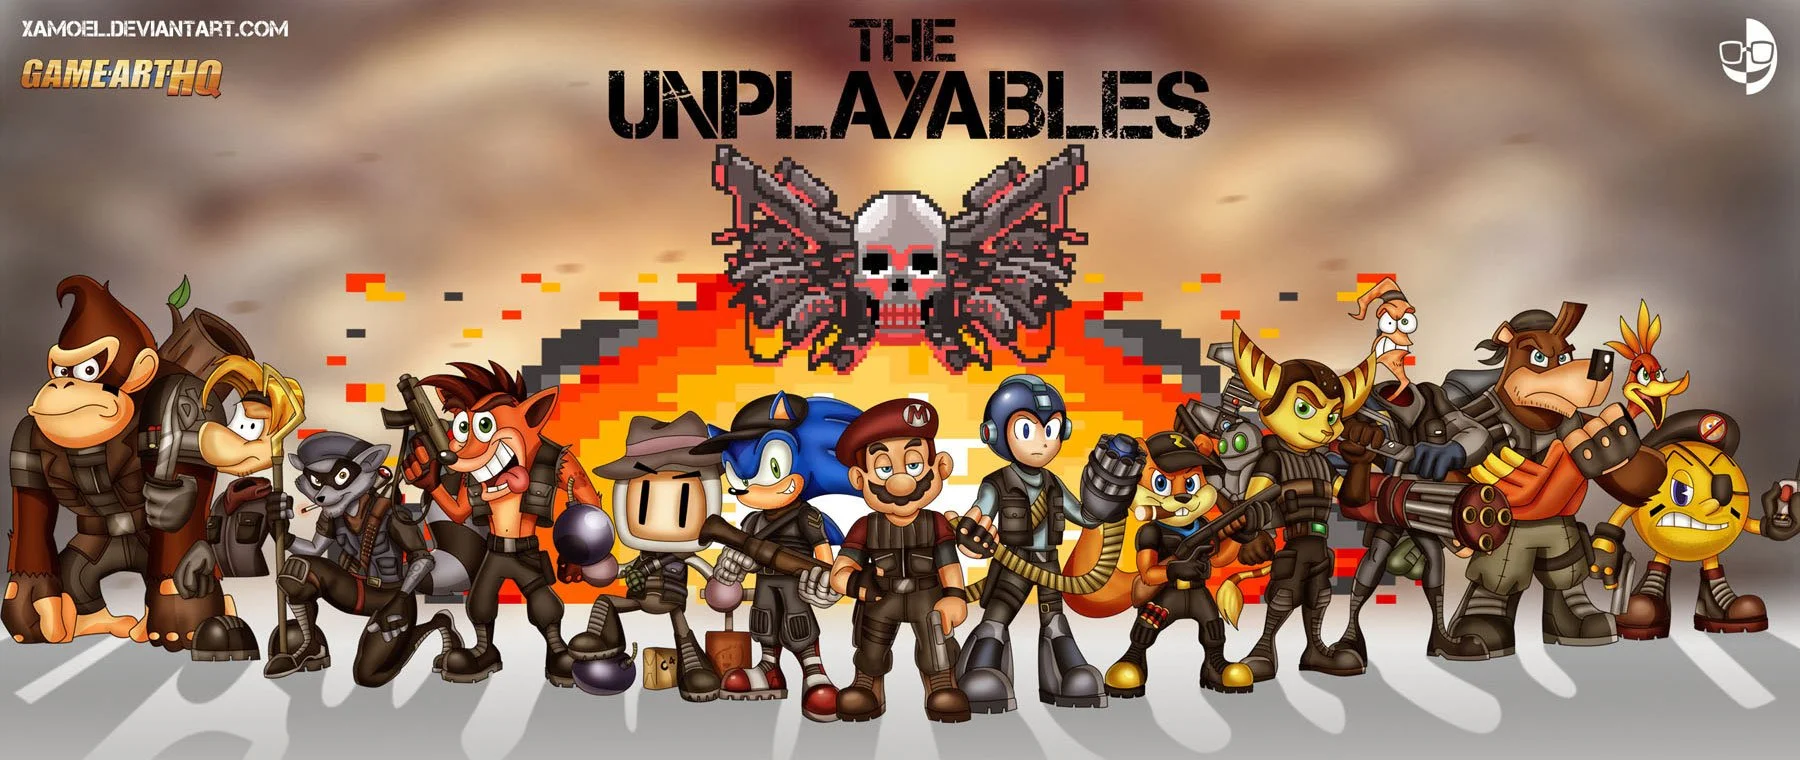 The Unplayables! от чилийского дуэта [**Xamoel**](http://xamoel.deviantart.com/)